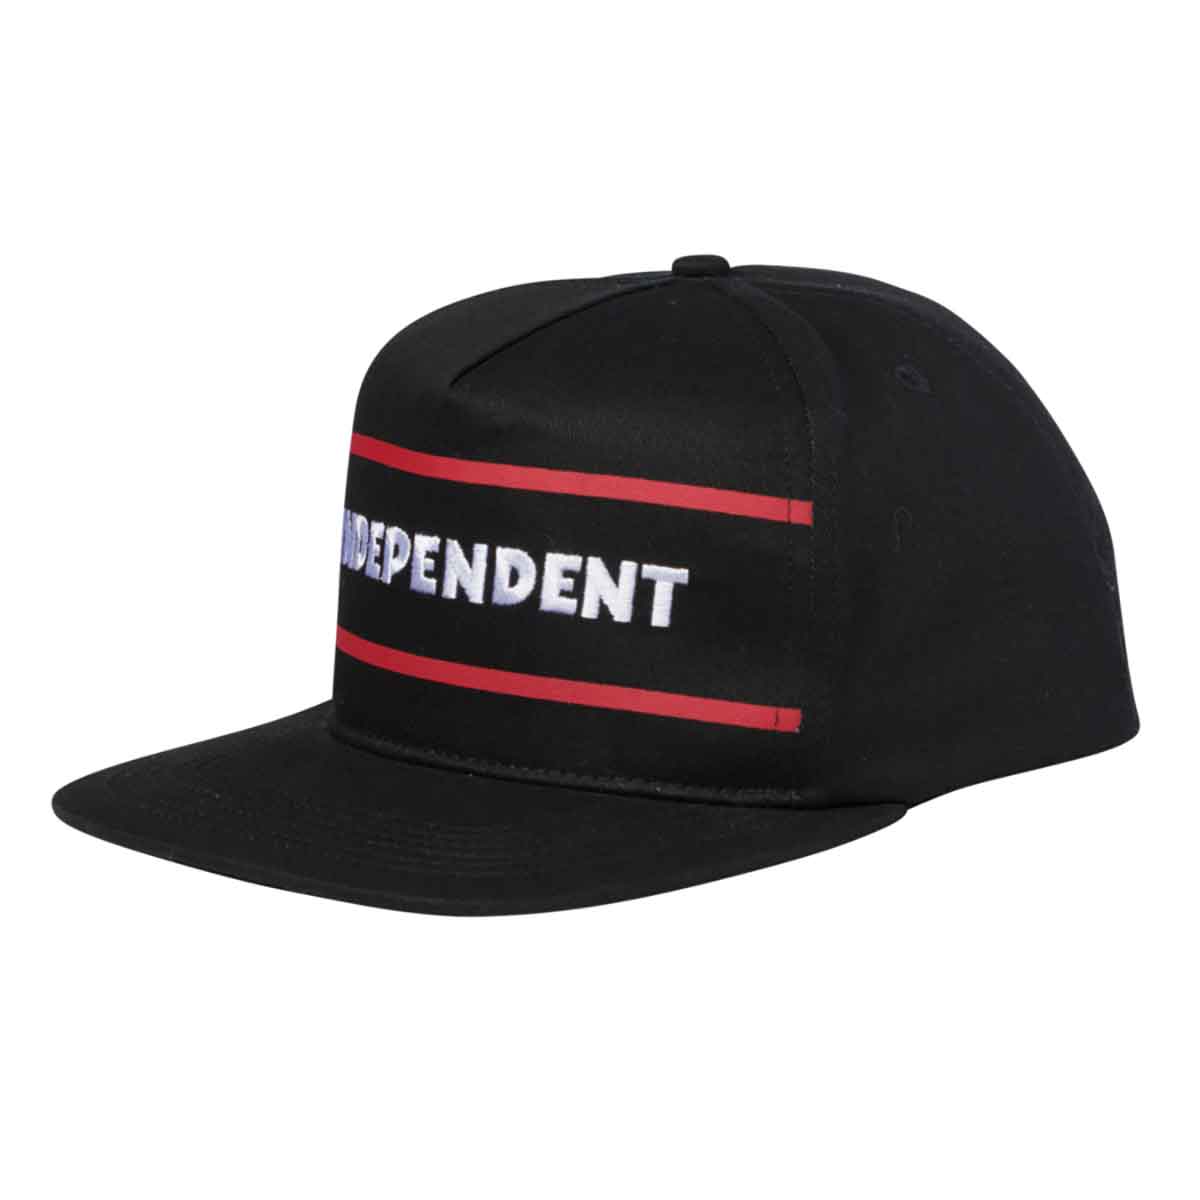 Independent Skateboard Trucks Span Mesh Trucker Snapback High Profile Hat Black